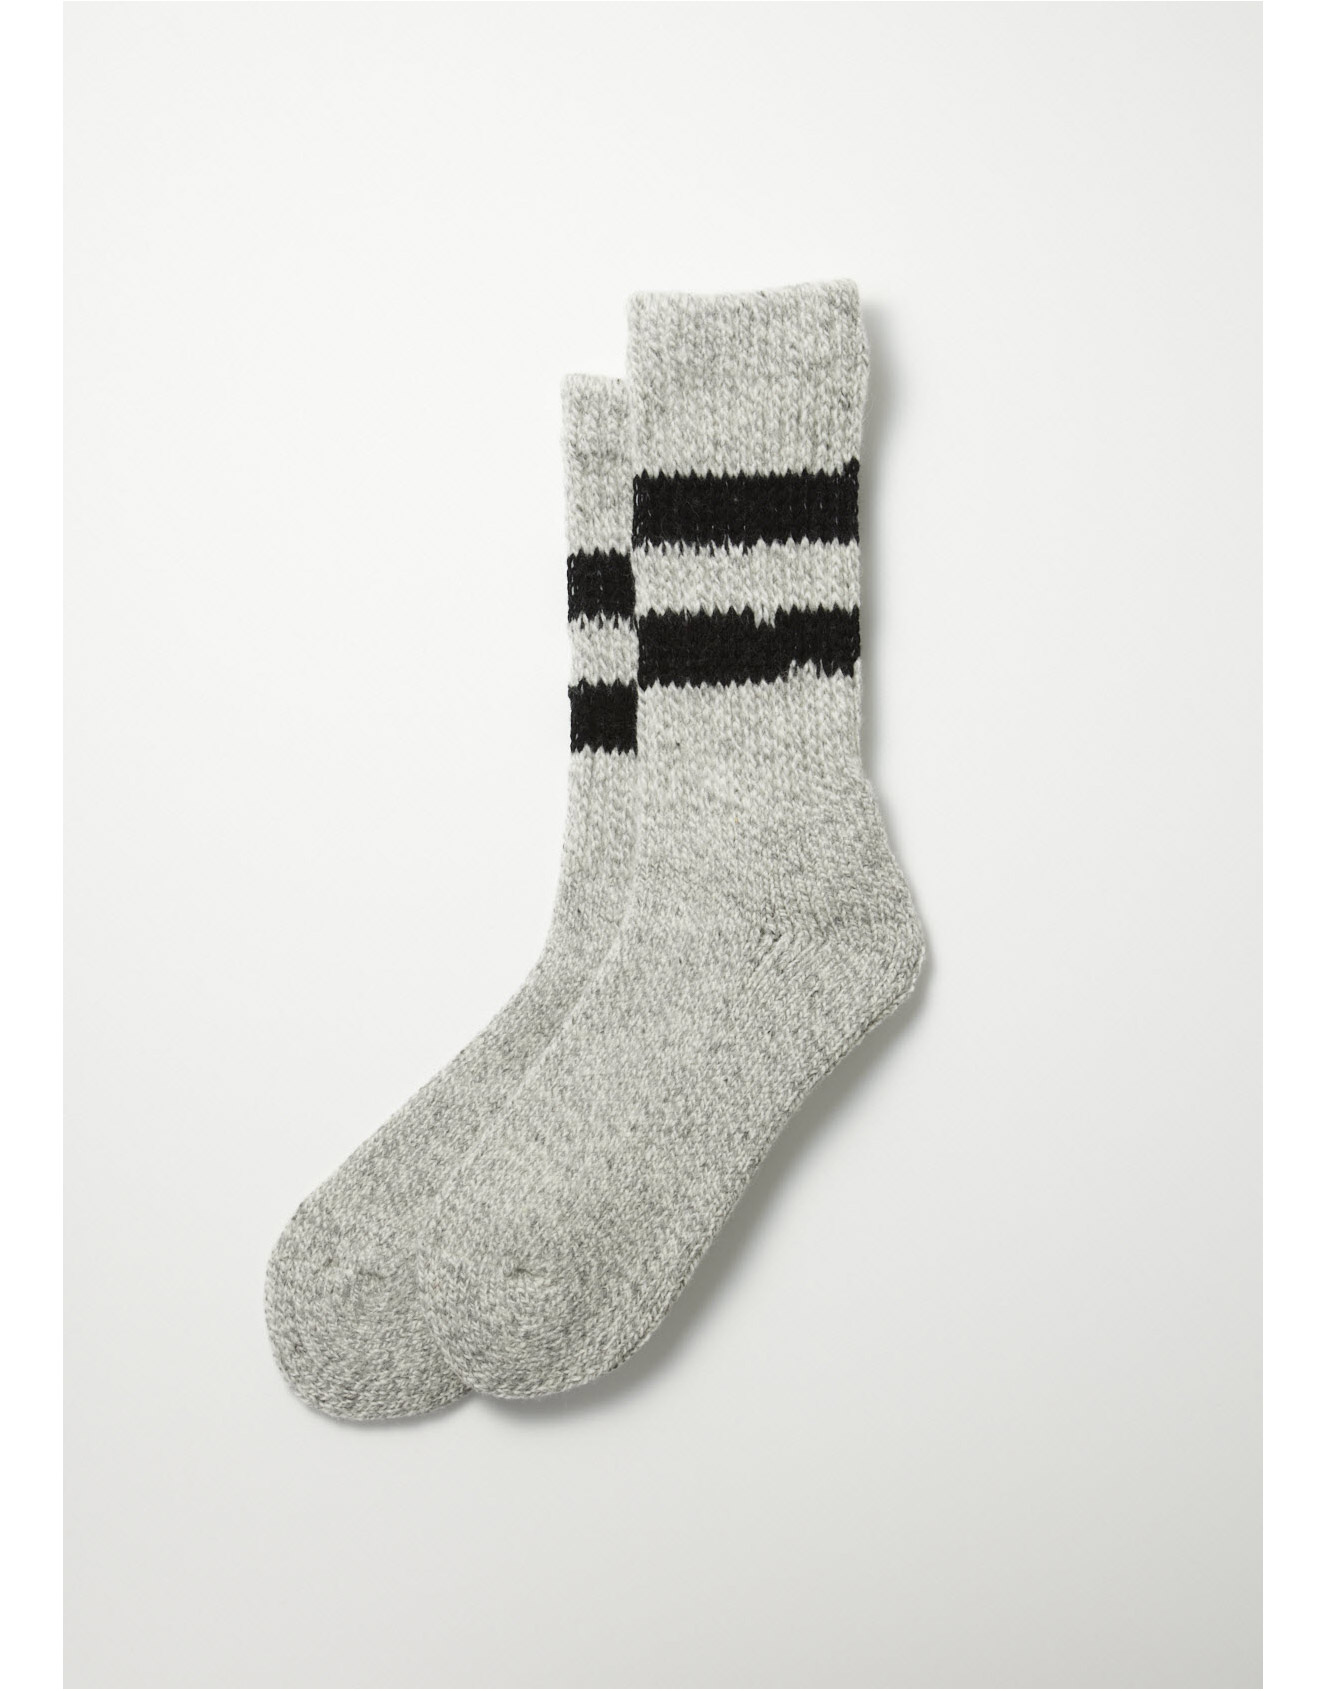 RoToTo – Retro Winter Outdoor Socks